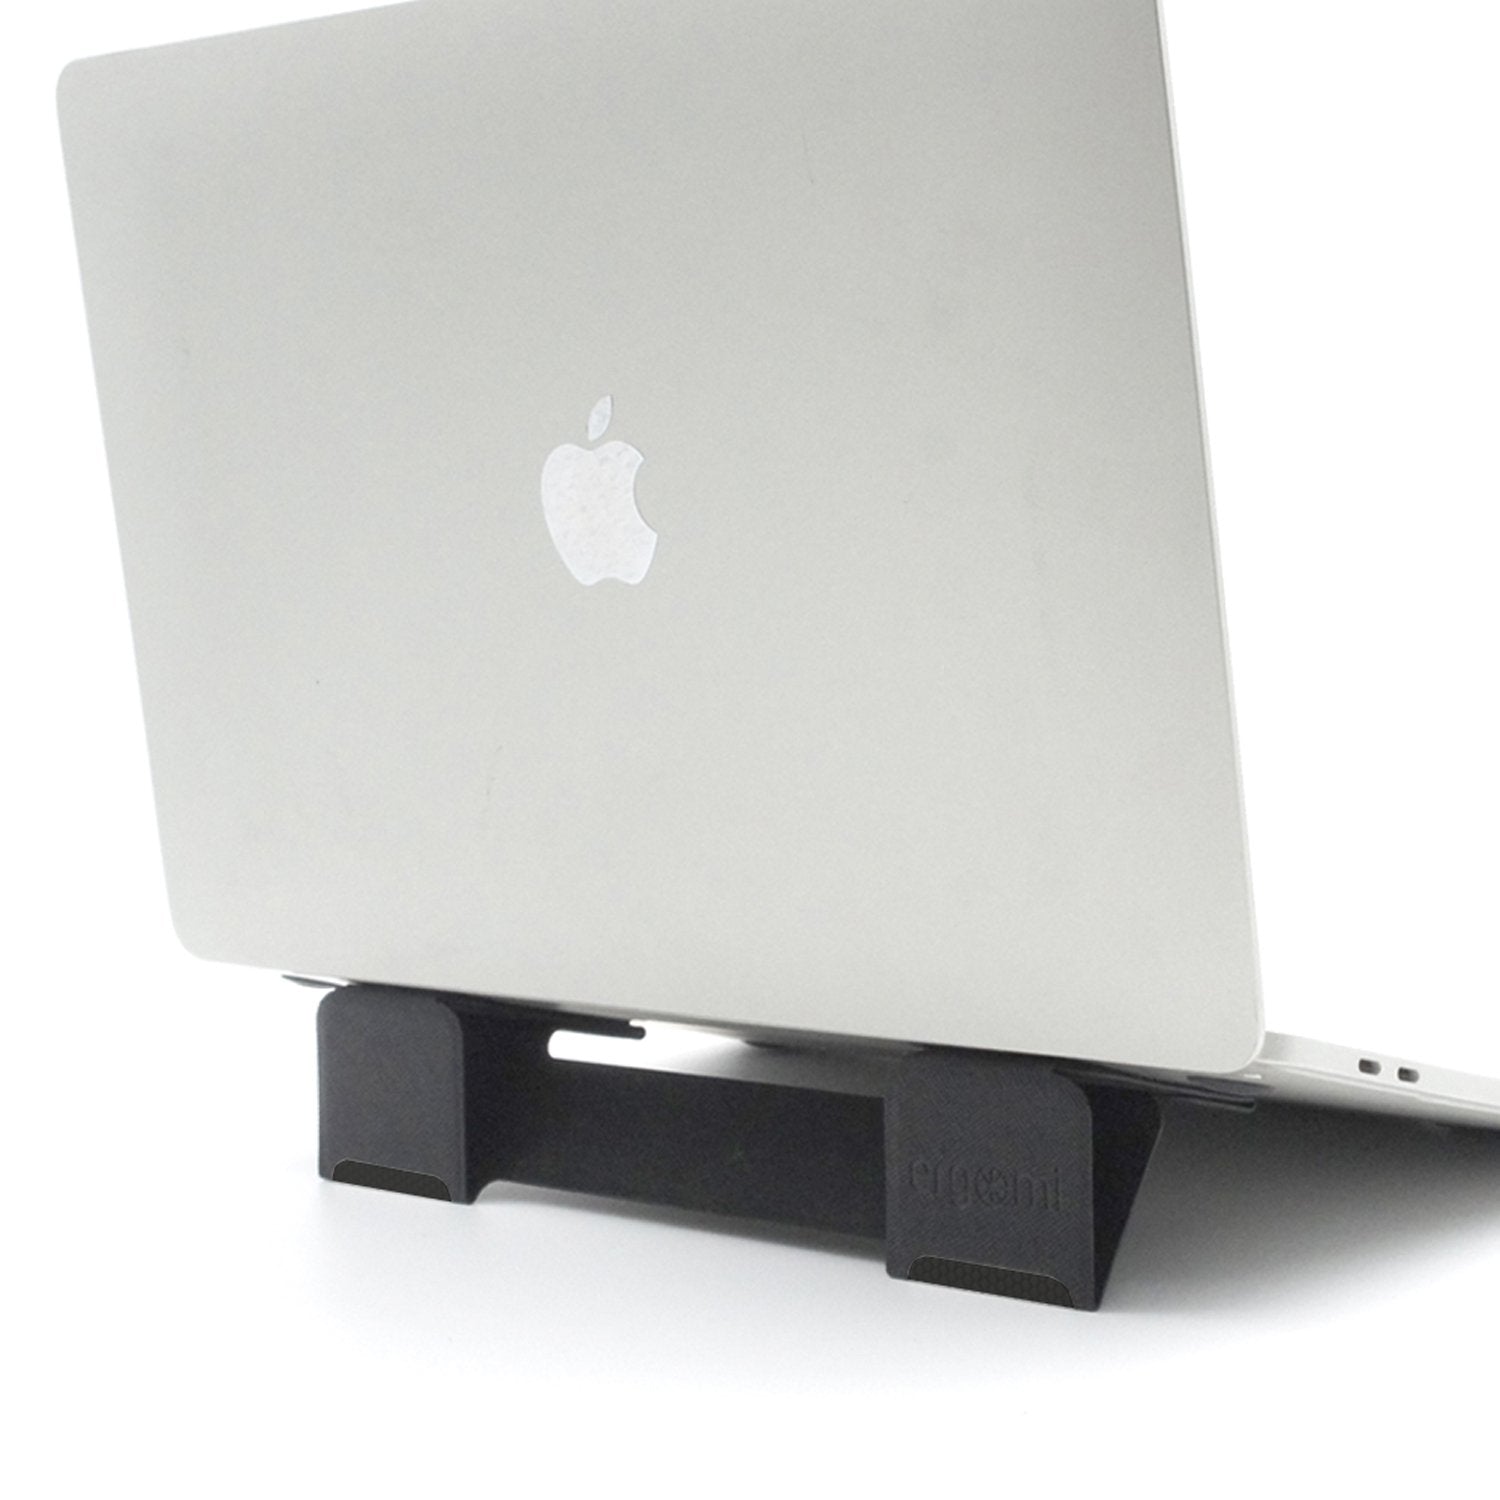 Lopww + Adhesive Reusable Mini Laptop Stand